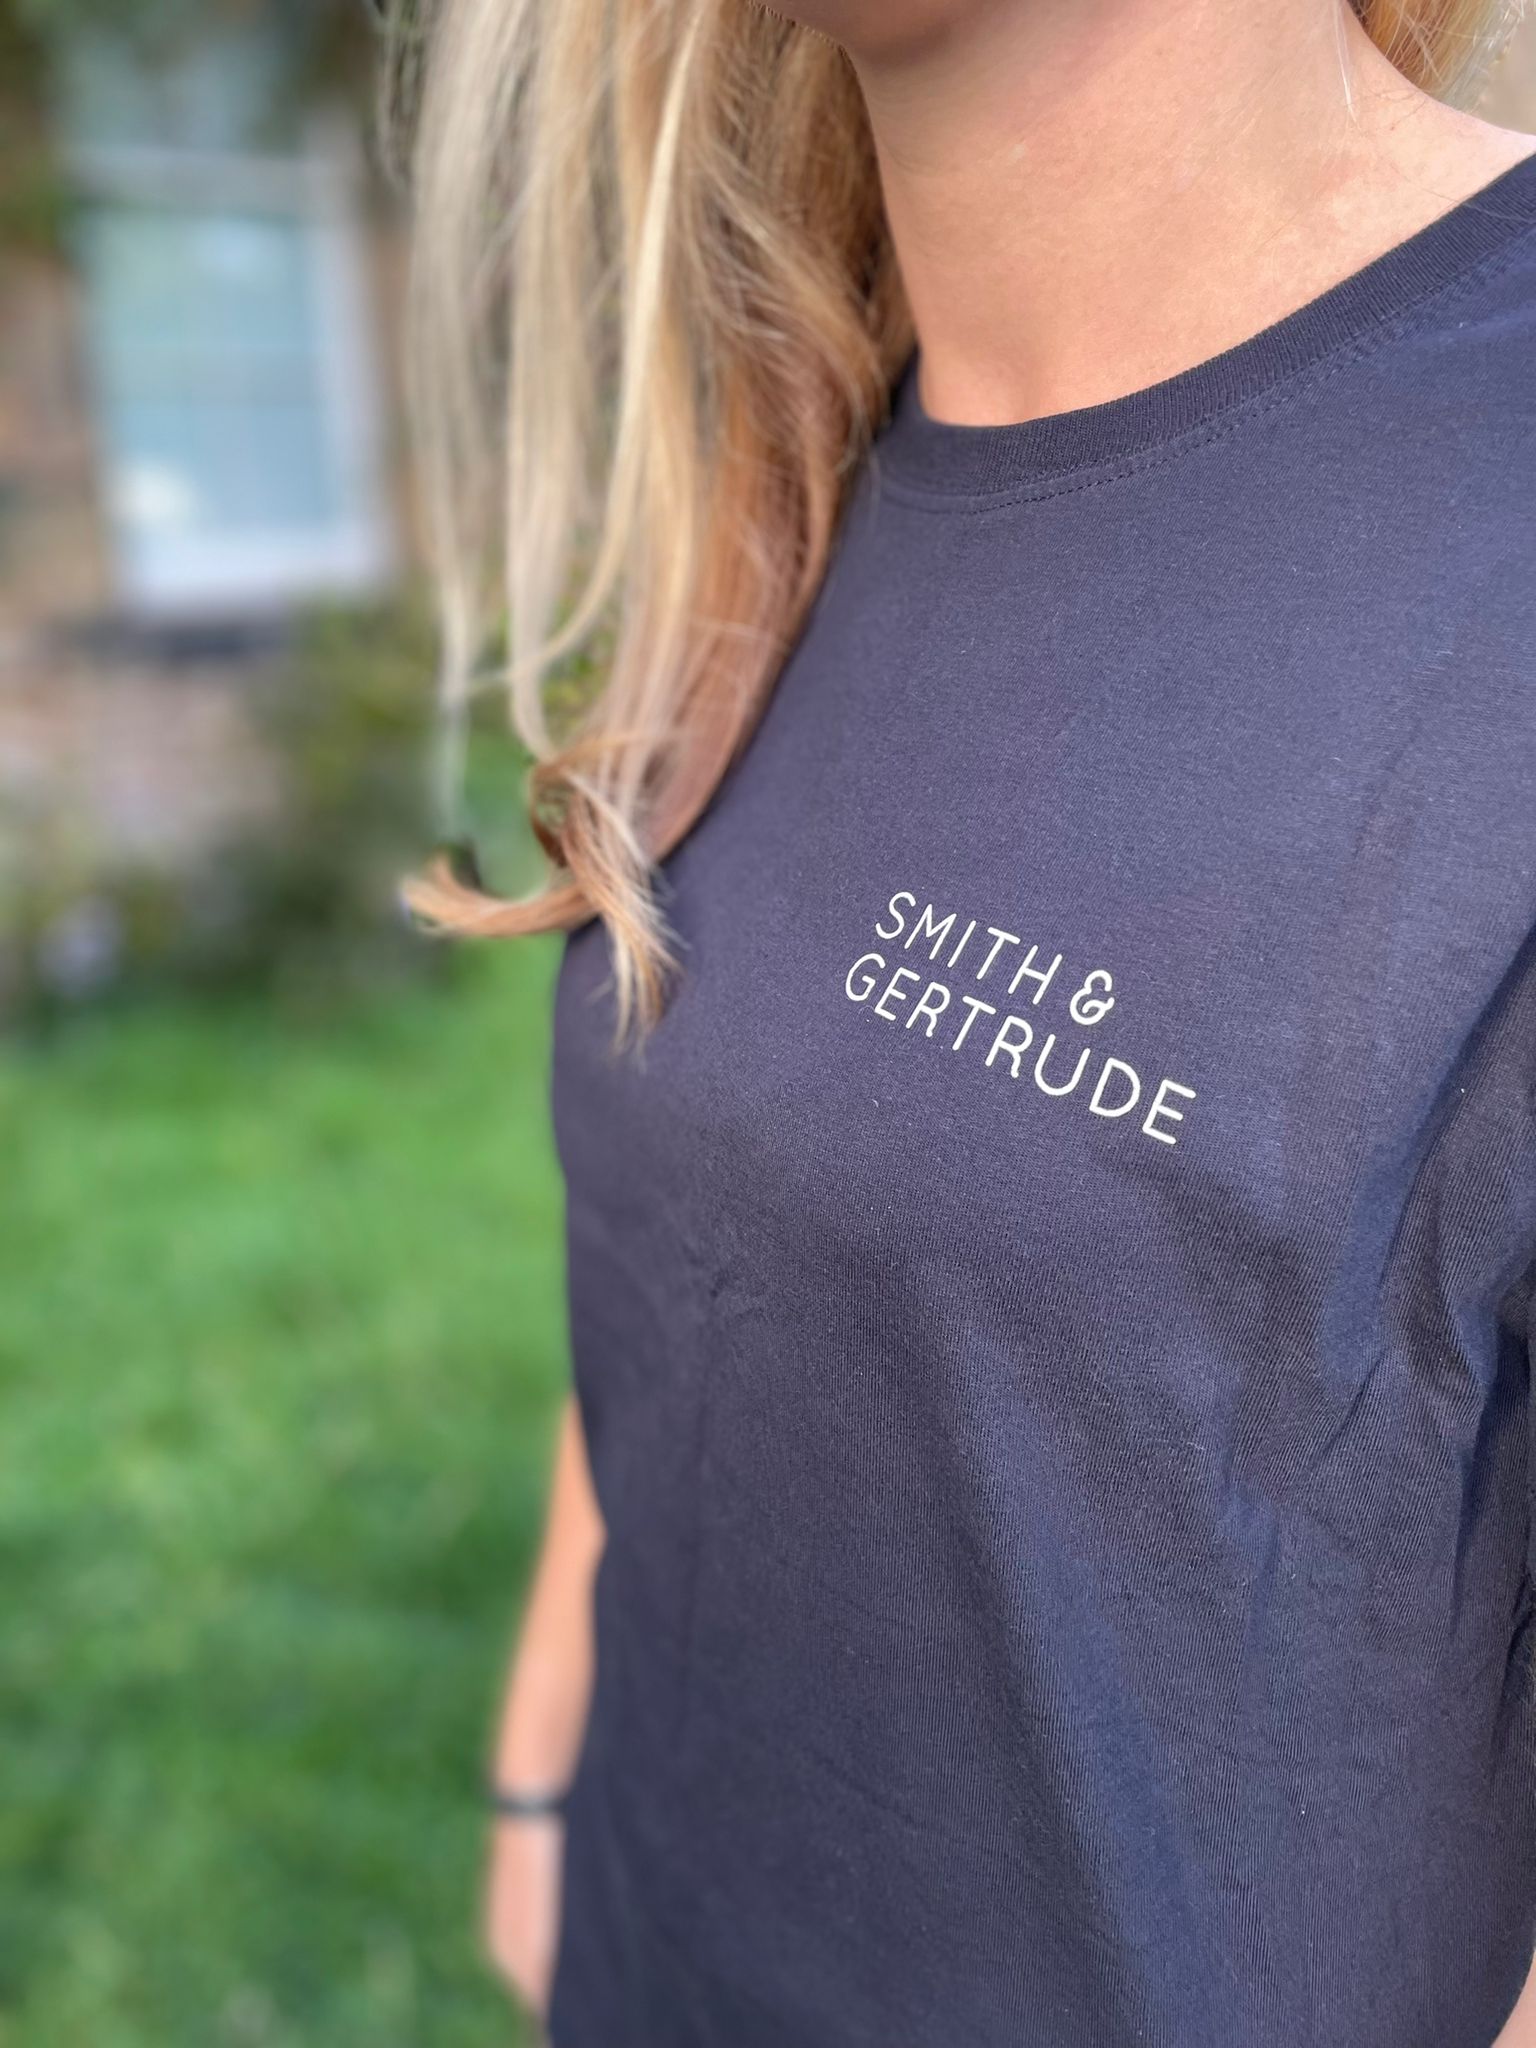 Smith & Gertrude Organic Cotton T-shirts